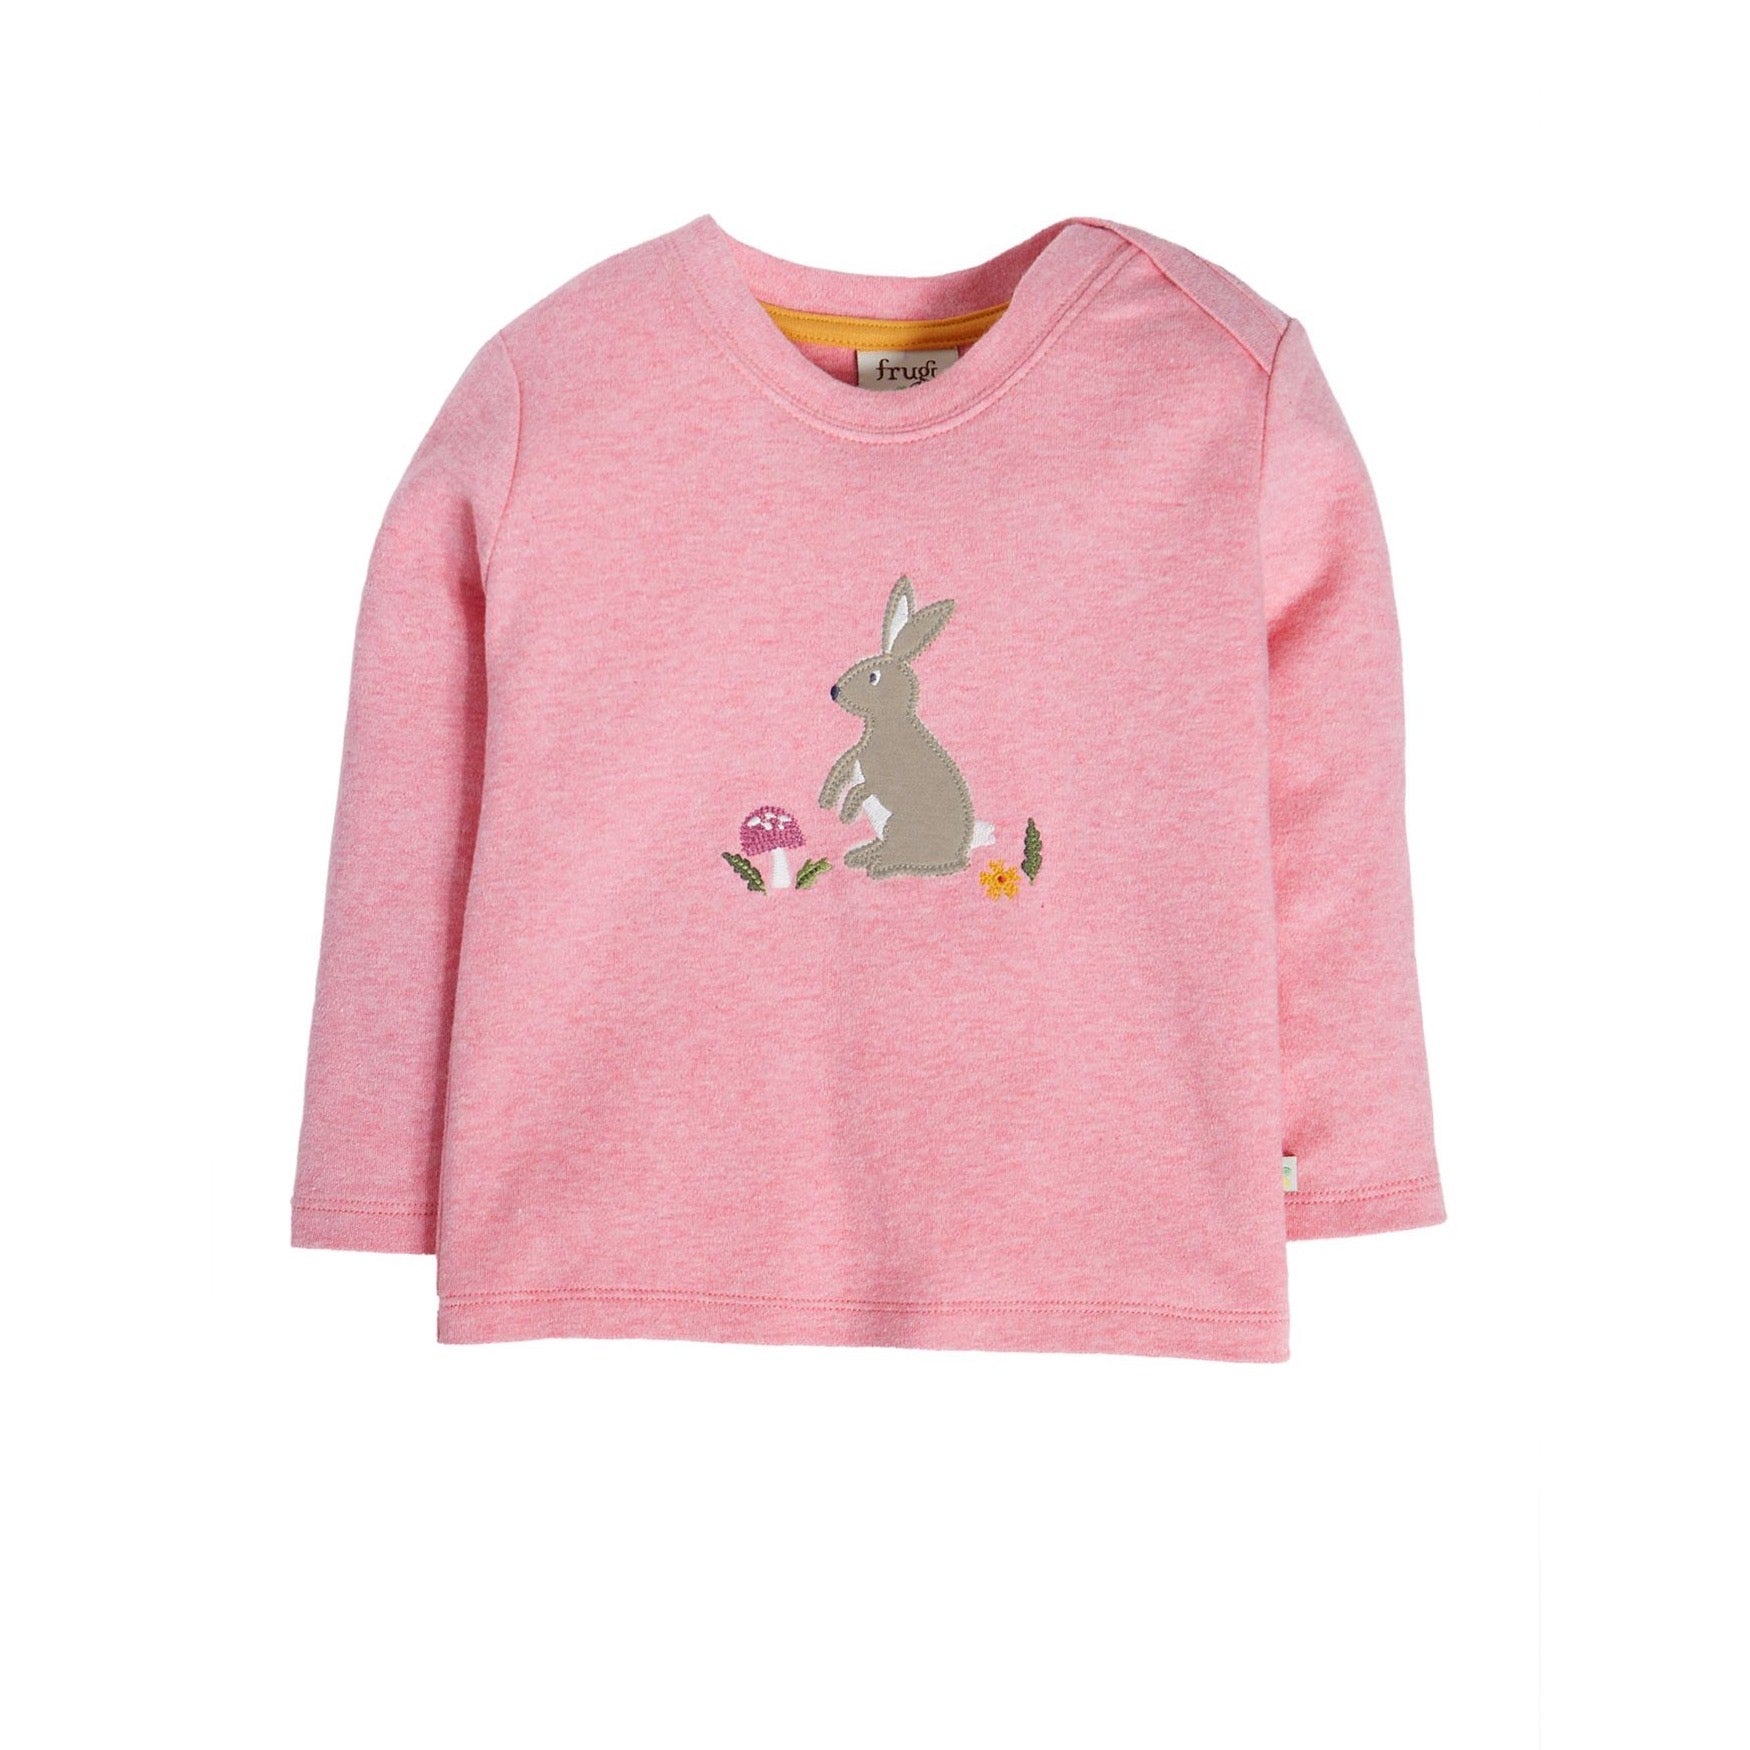 Frugi Orion Infant T-Shirt Pink Bunny Clothing 0-3M / Pink,3-6M / Pink,6-9M / Pink,9-12M / Pink,12-18M / Pink